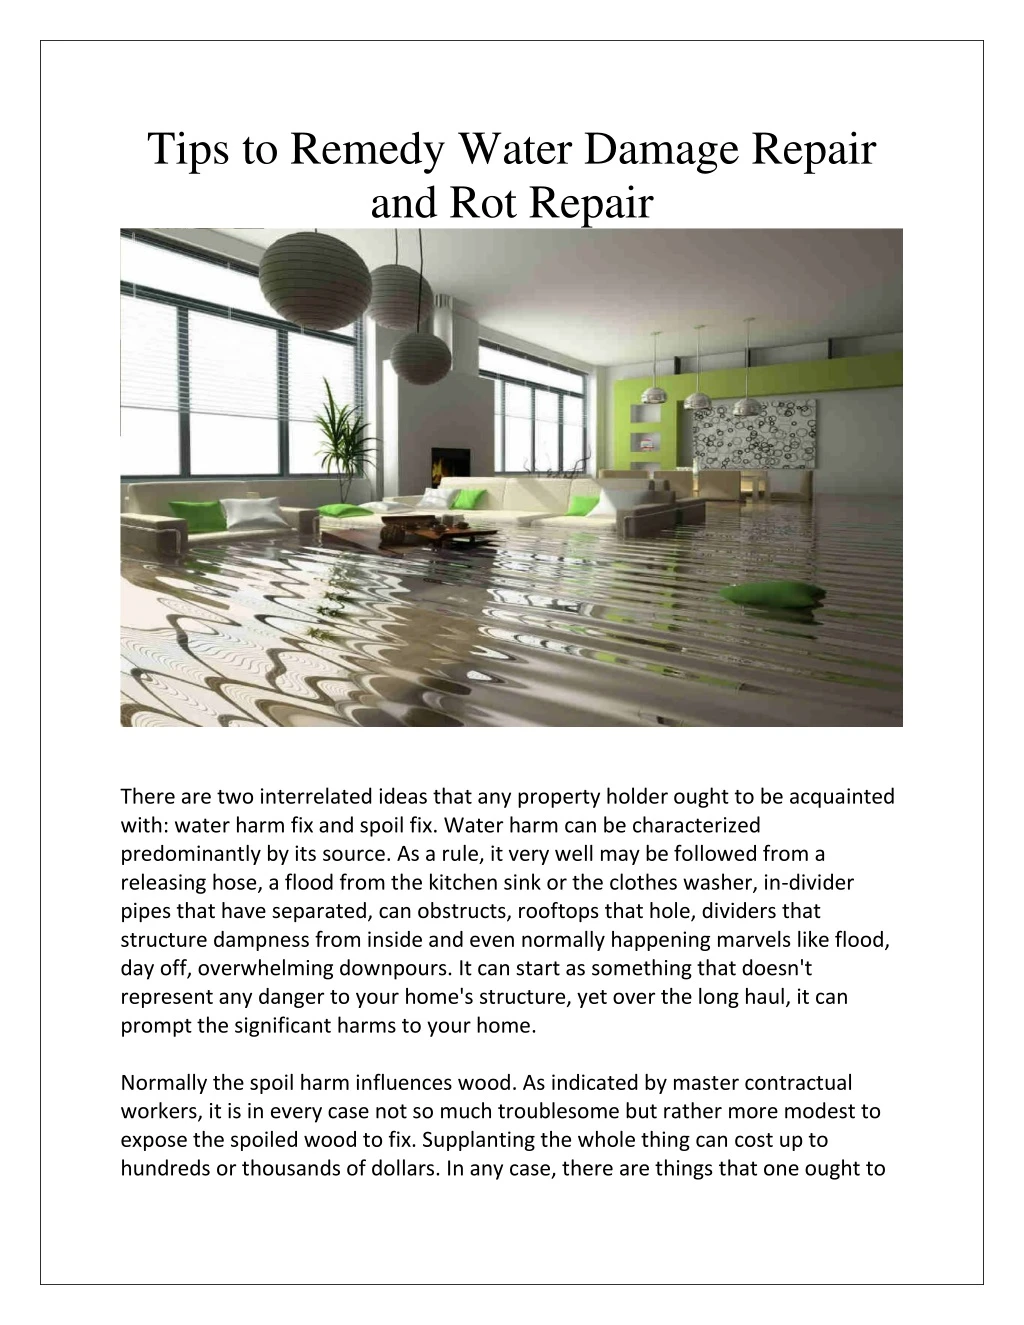 tips to remedy water damage repair and rot repair